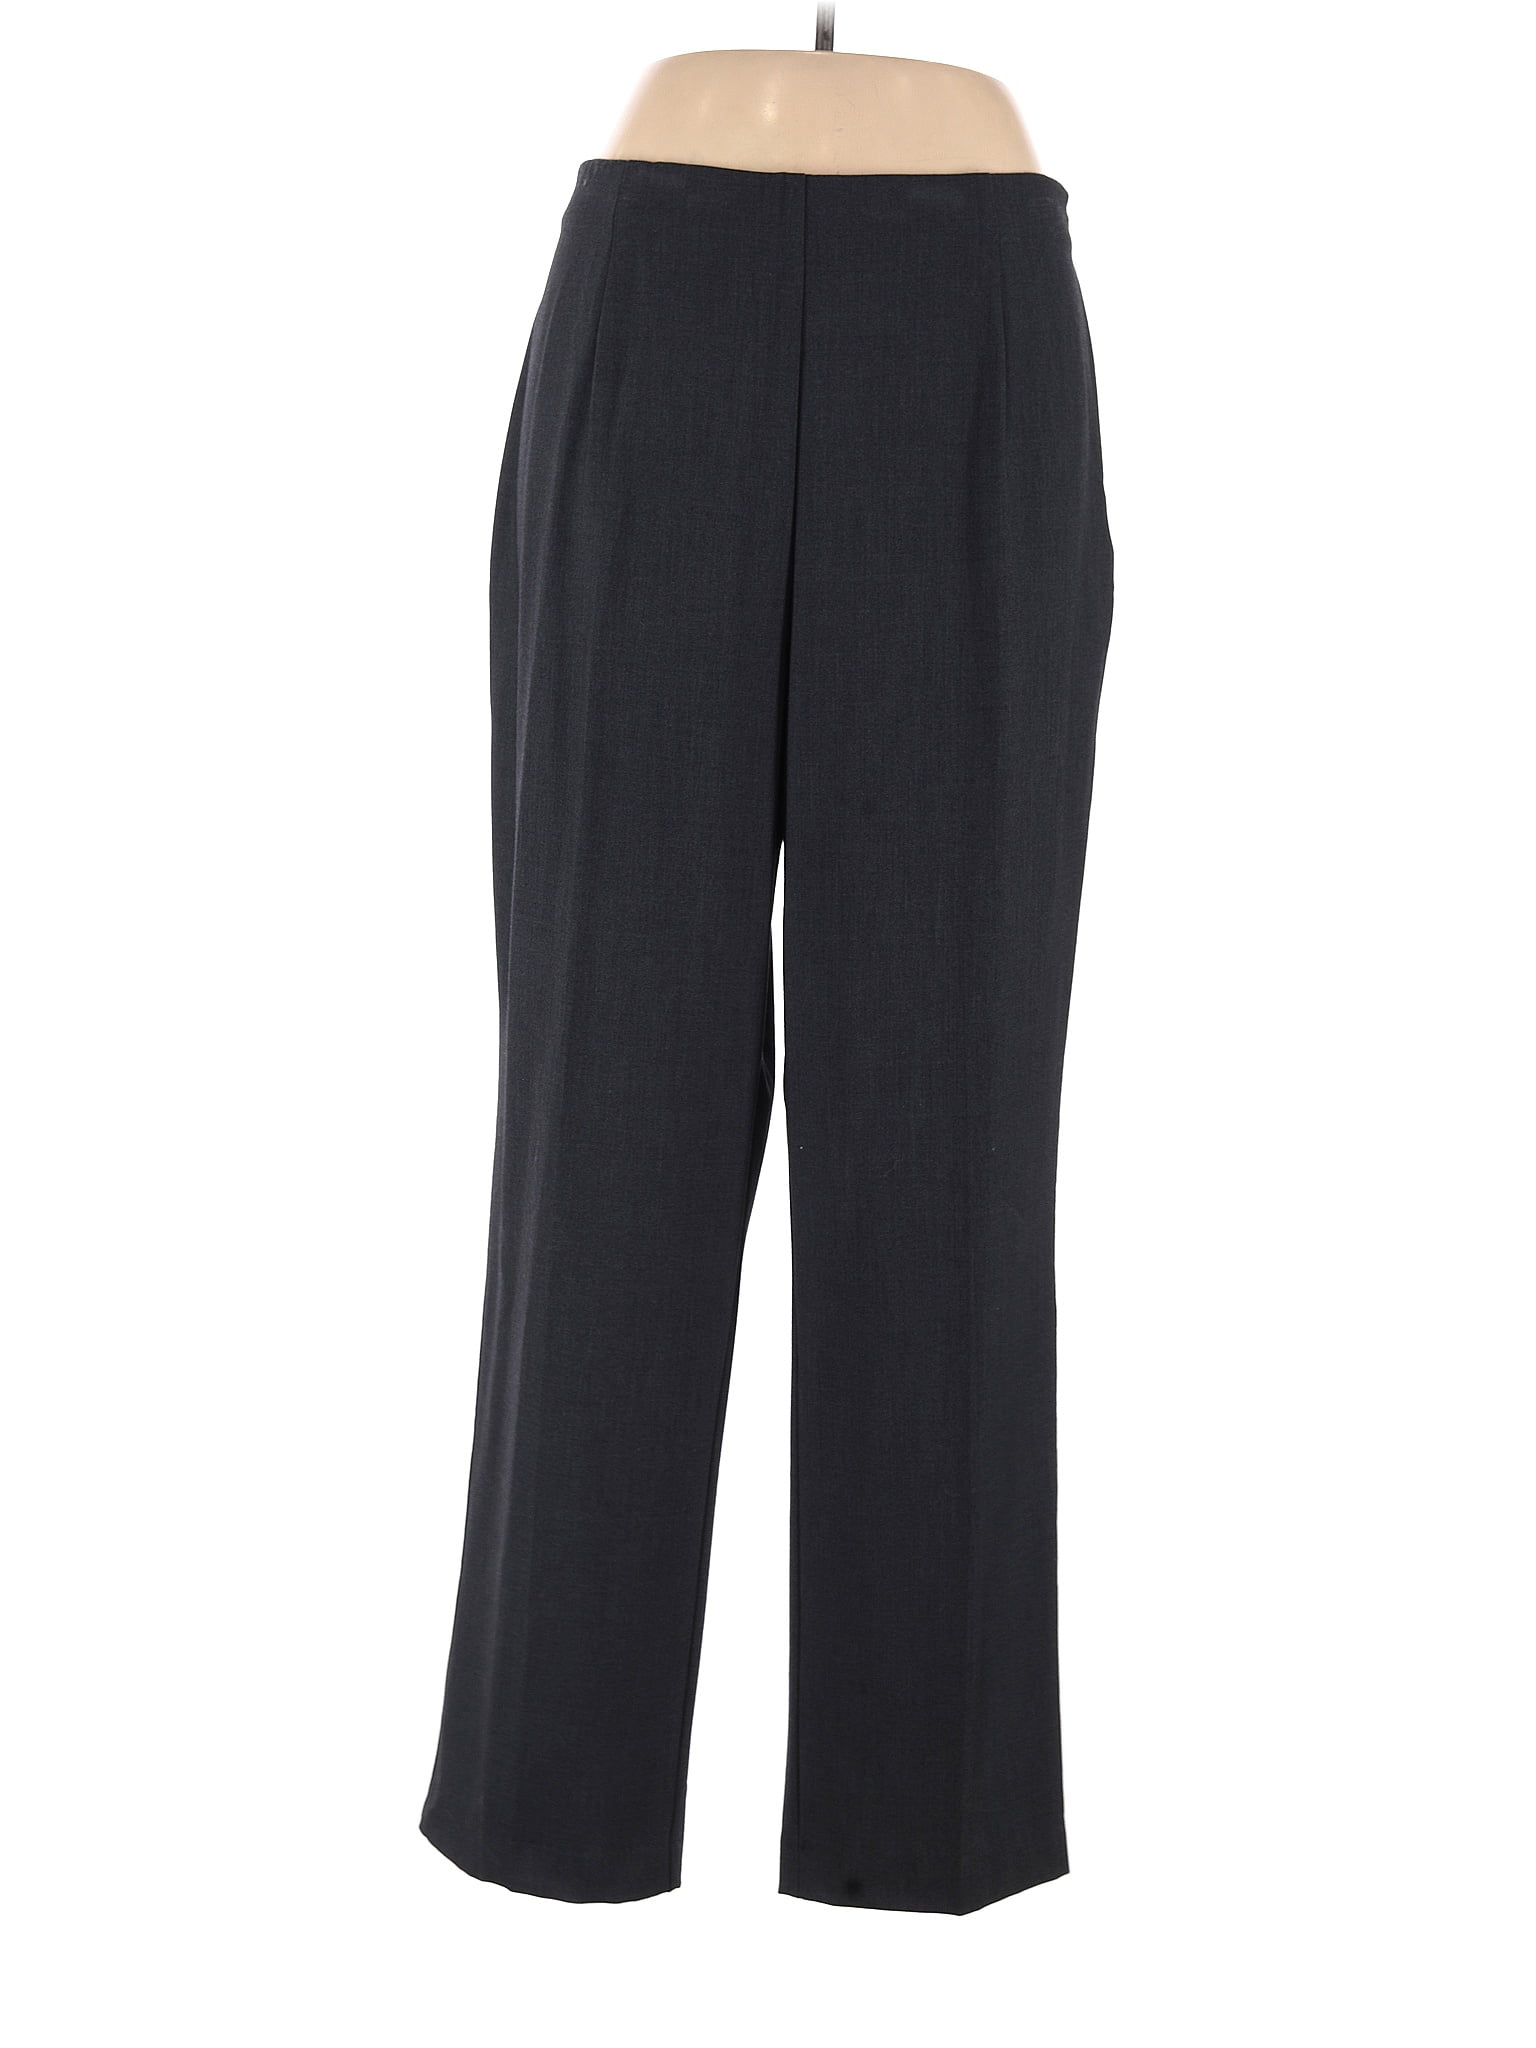 Susan Graver Black Casual Pants Size XL - 67% off | thredUP